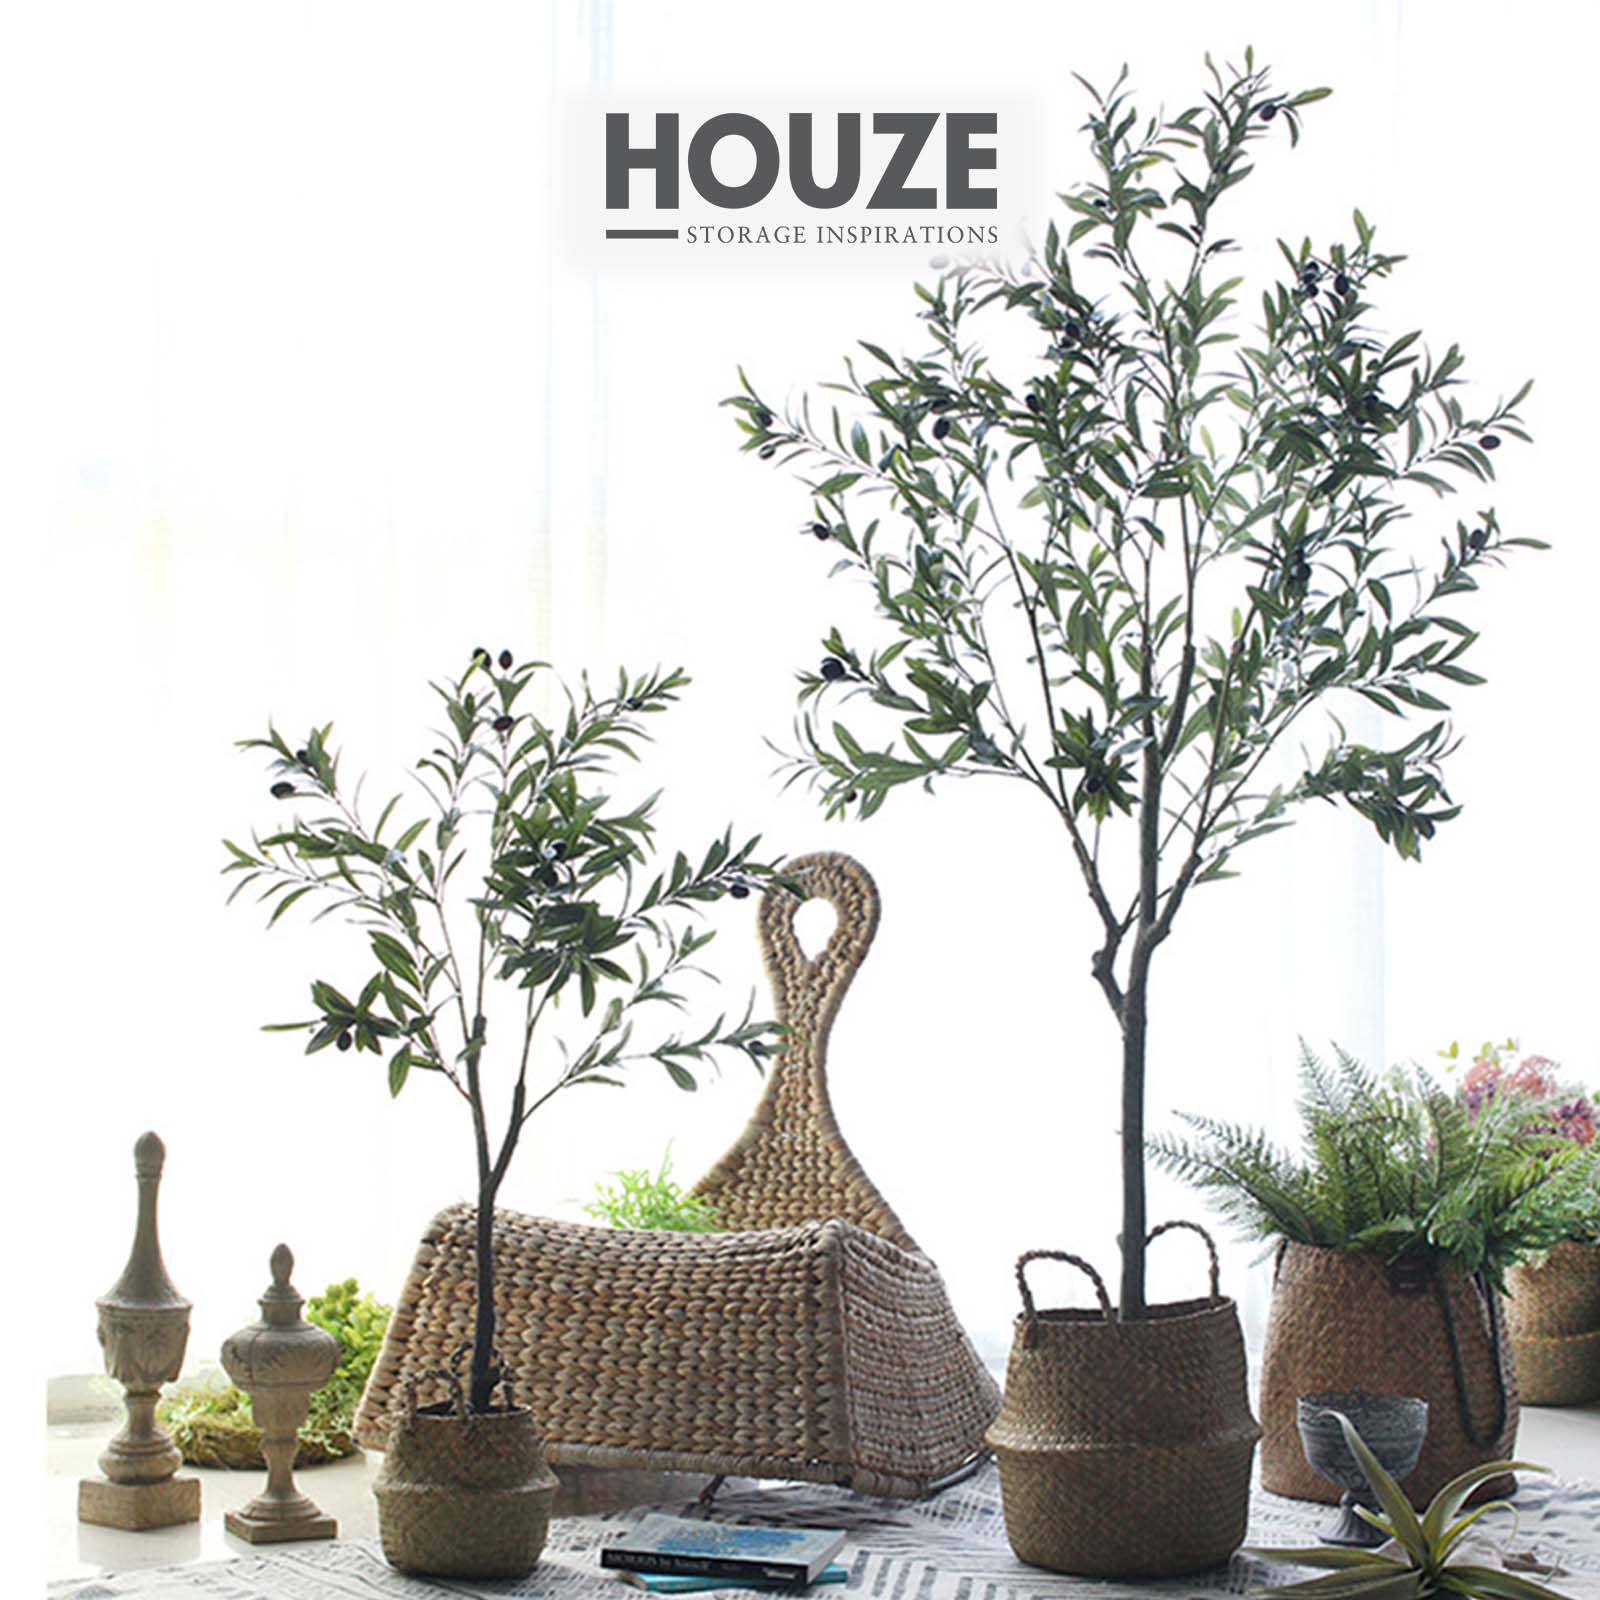 HOUZE - Potted FAUX Olive Tree - 3 sizes - 150cm|180cm|210cm